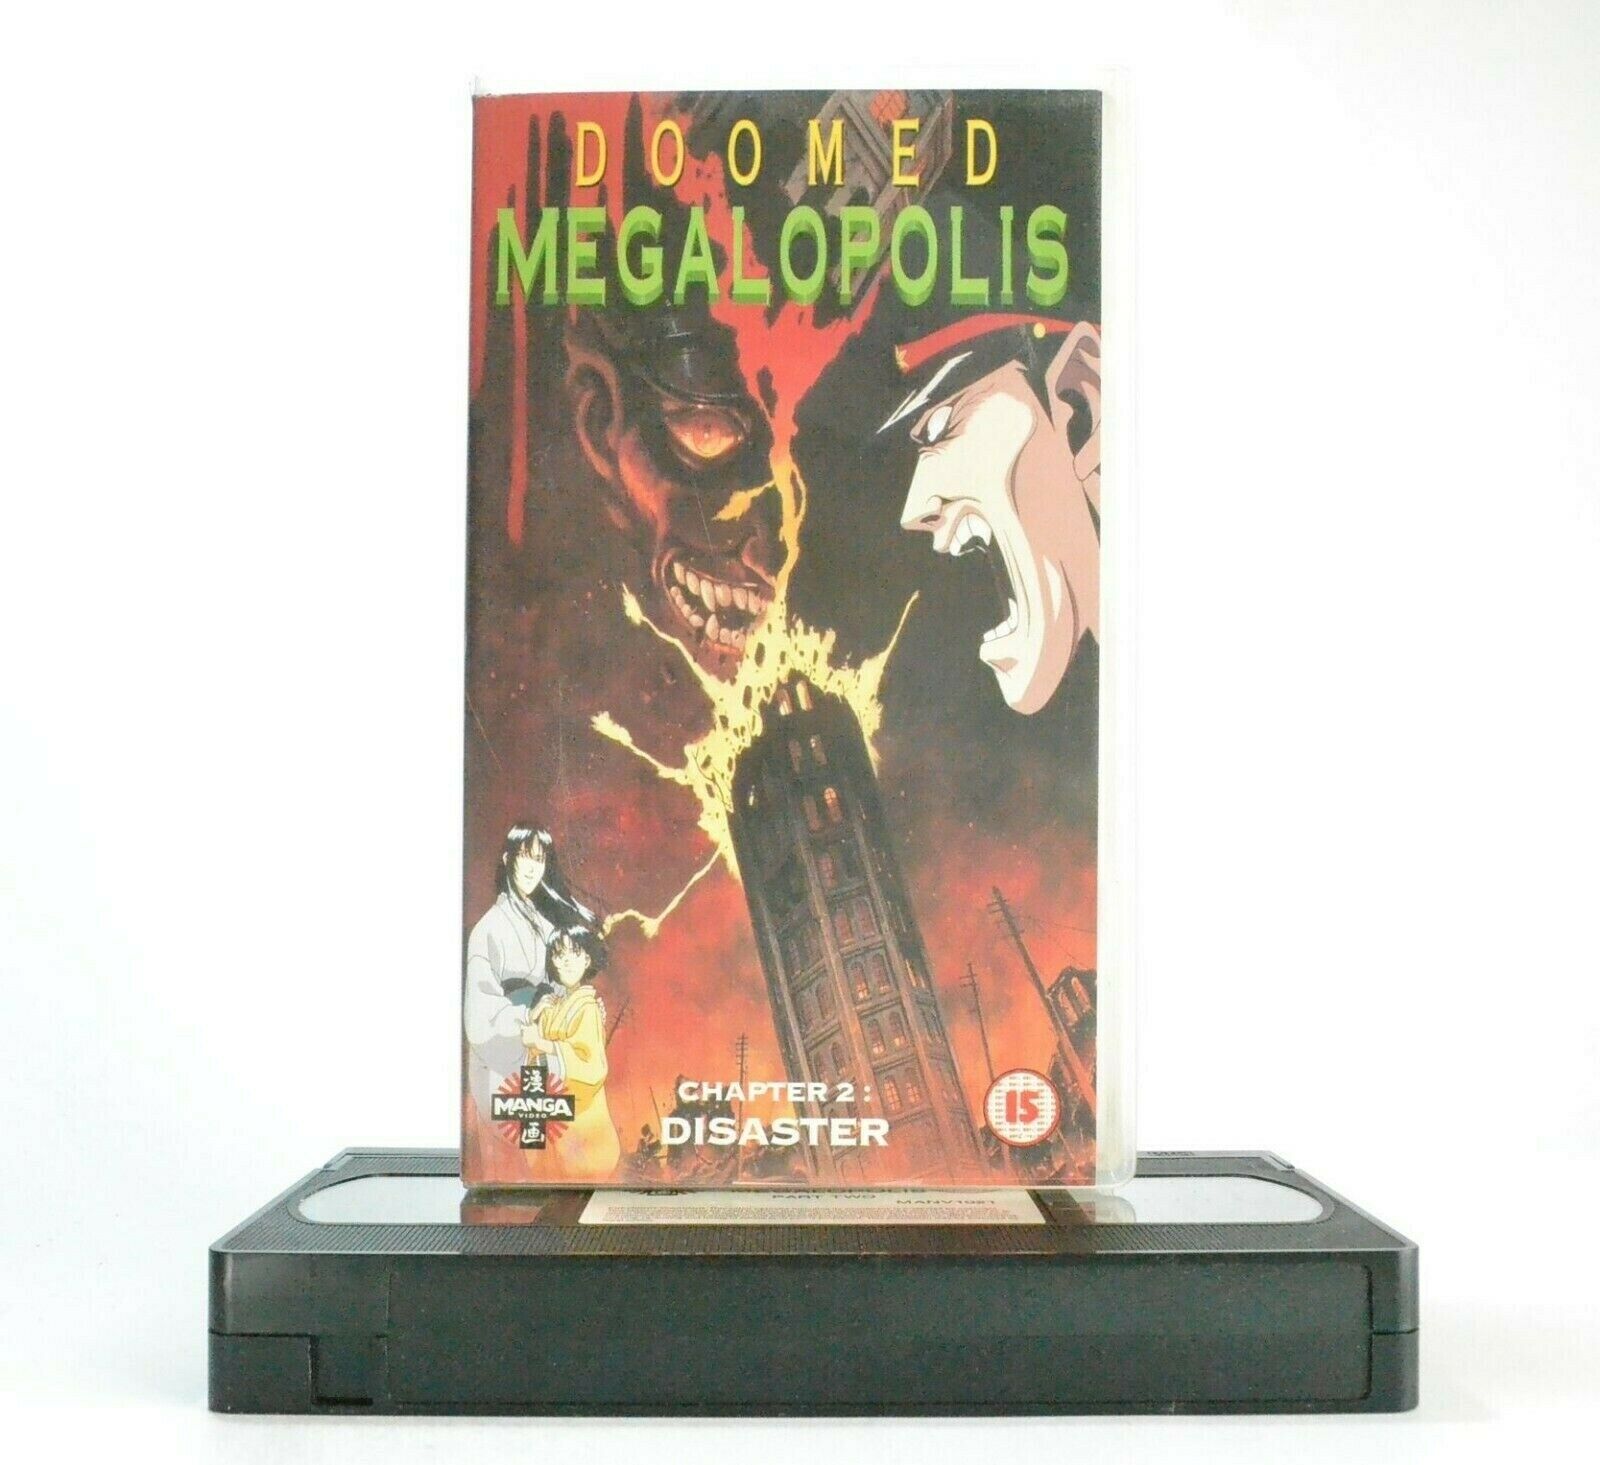 Doomed Megalopolis, Chapter 2: Disaster - Animation/Fantasy - TV Series - VHS-